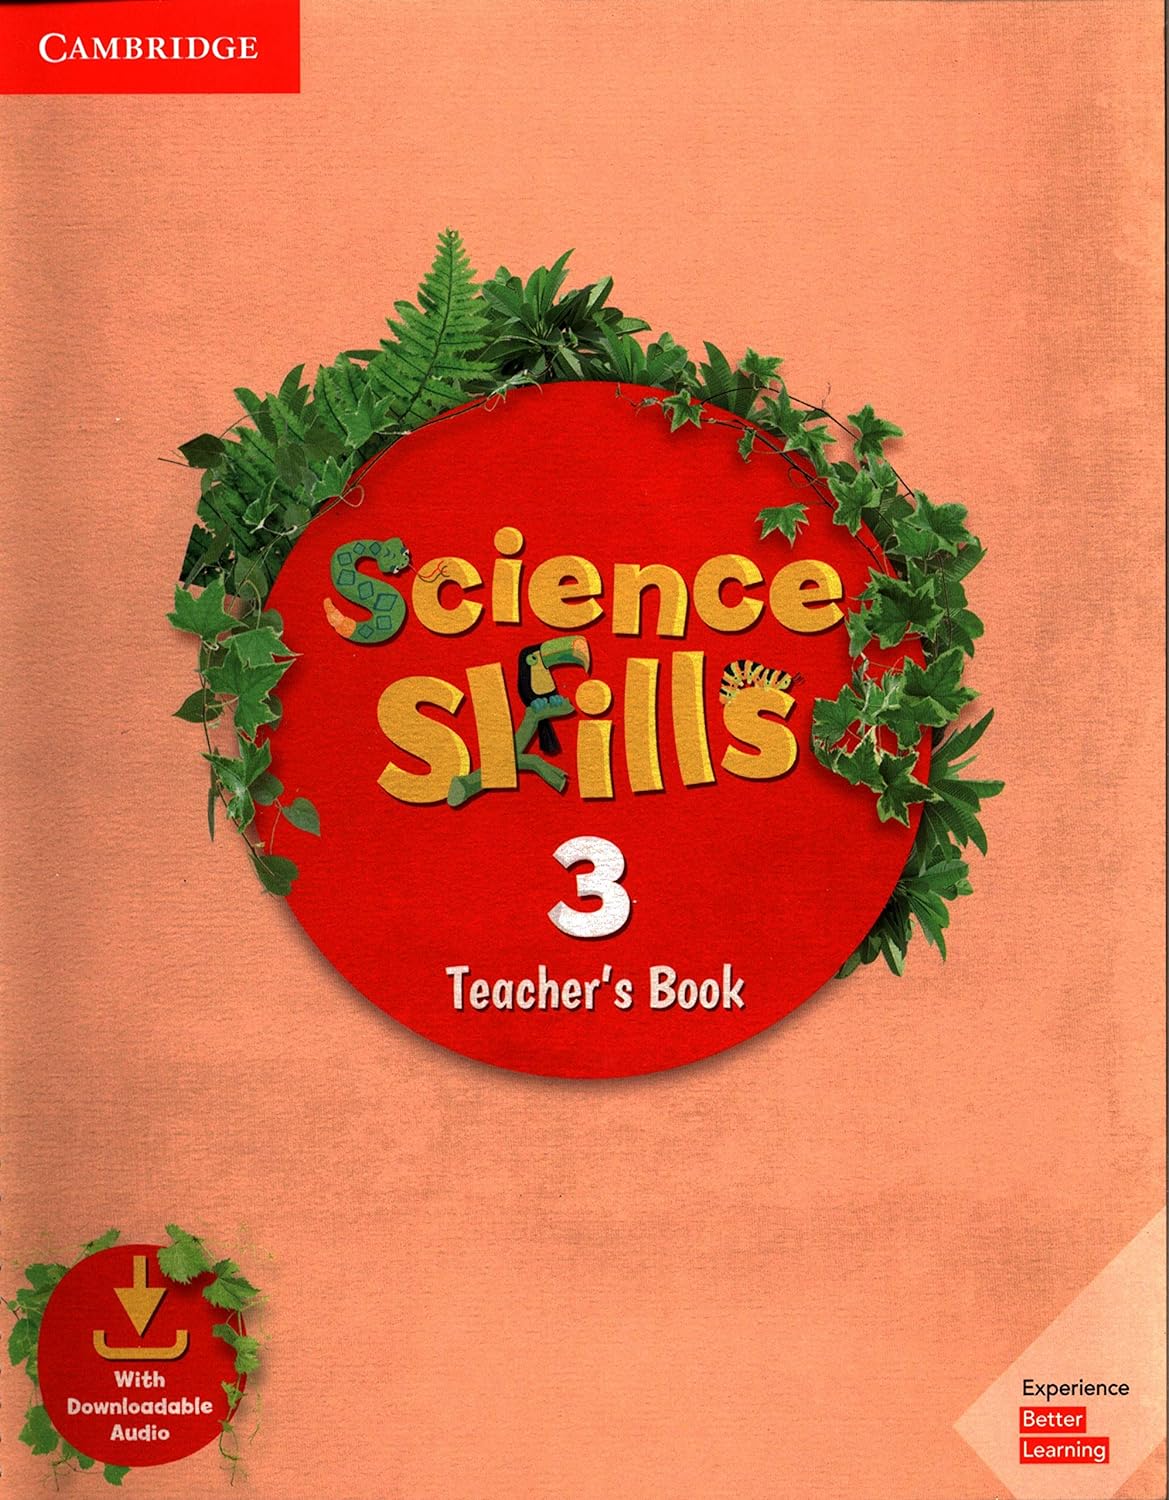 Cambridge teachers book. Science skills Cambridge. Science skills 3. pupil's book. Super Minds 3 teachers book. Cambridge teachers.